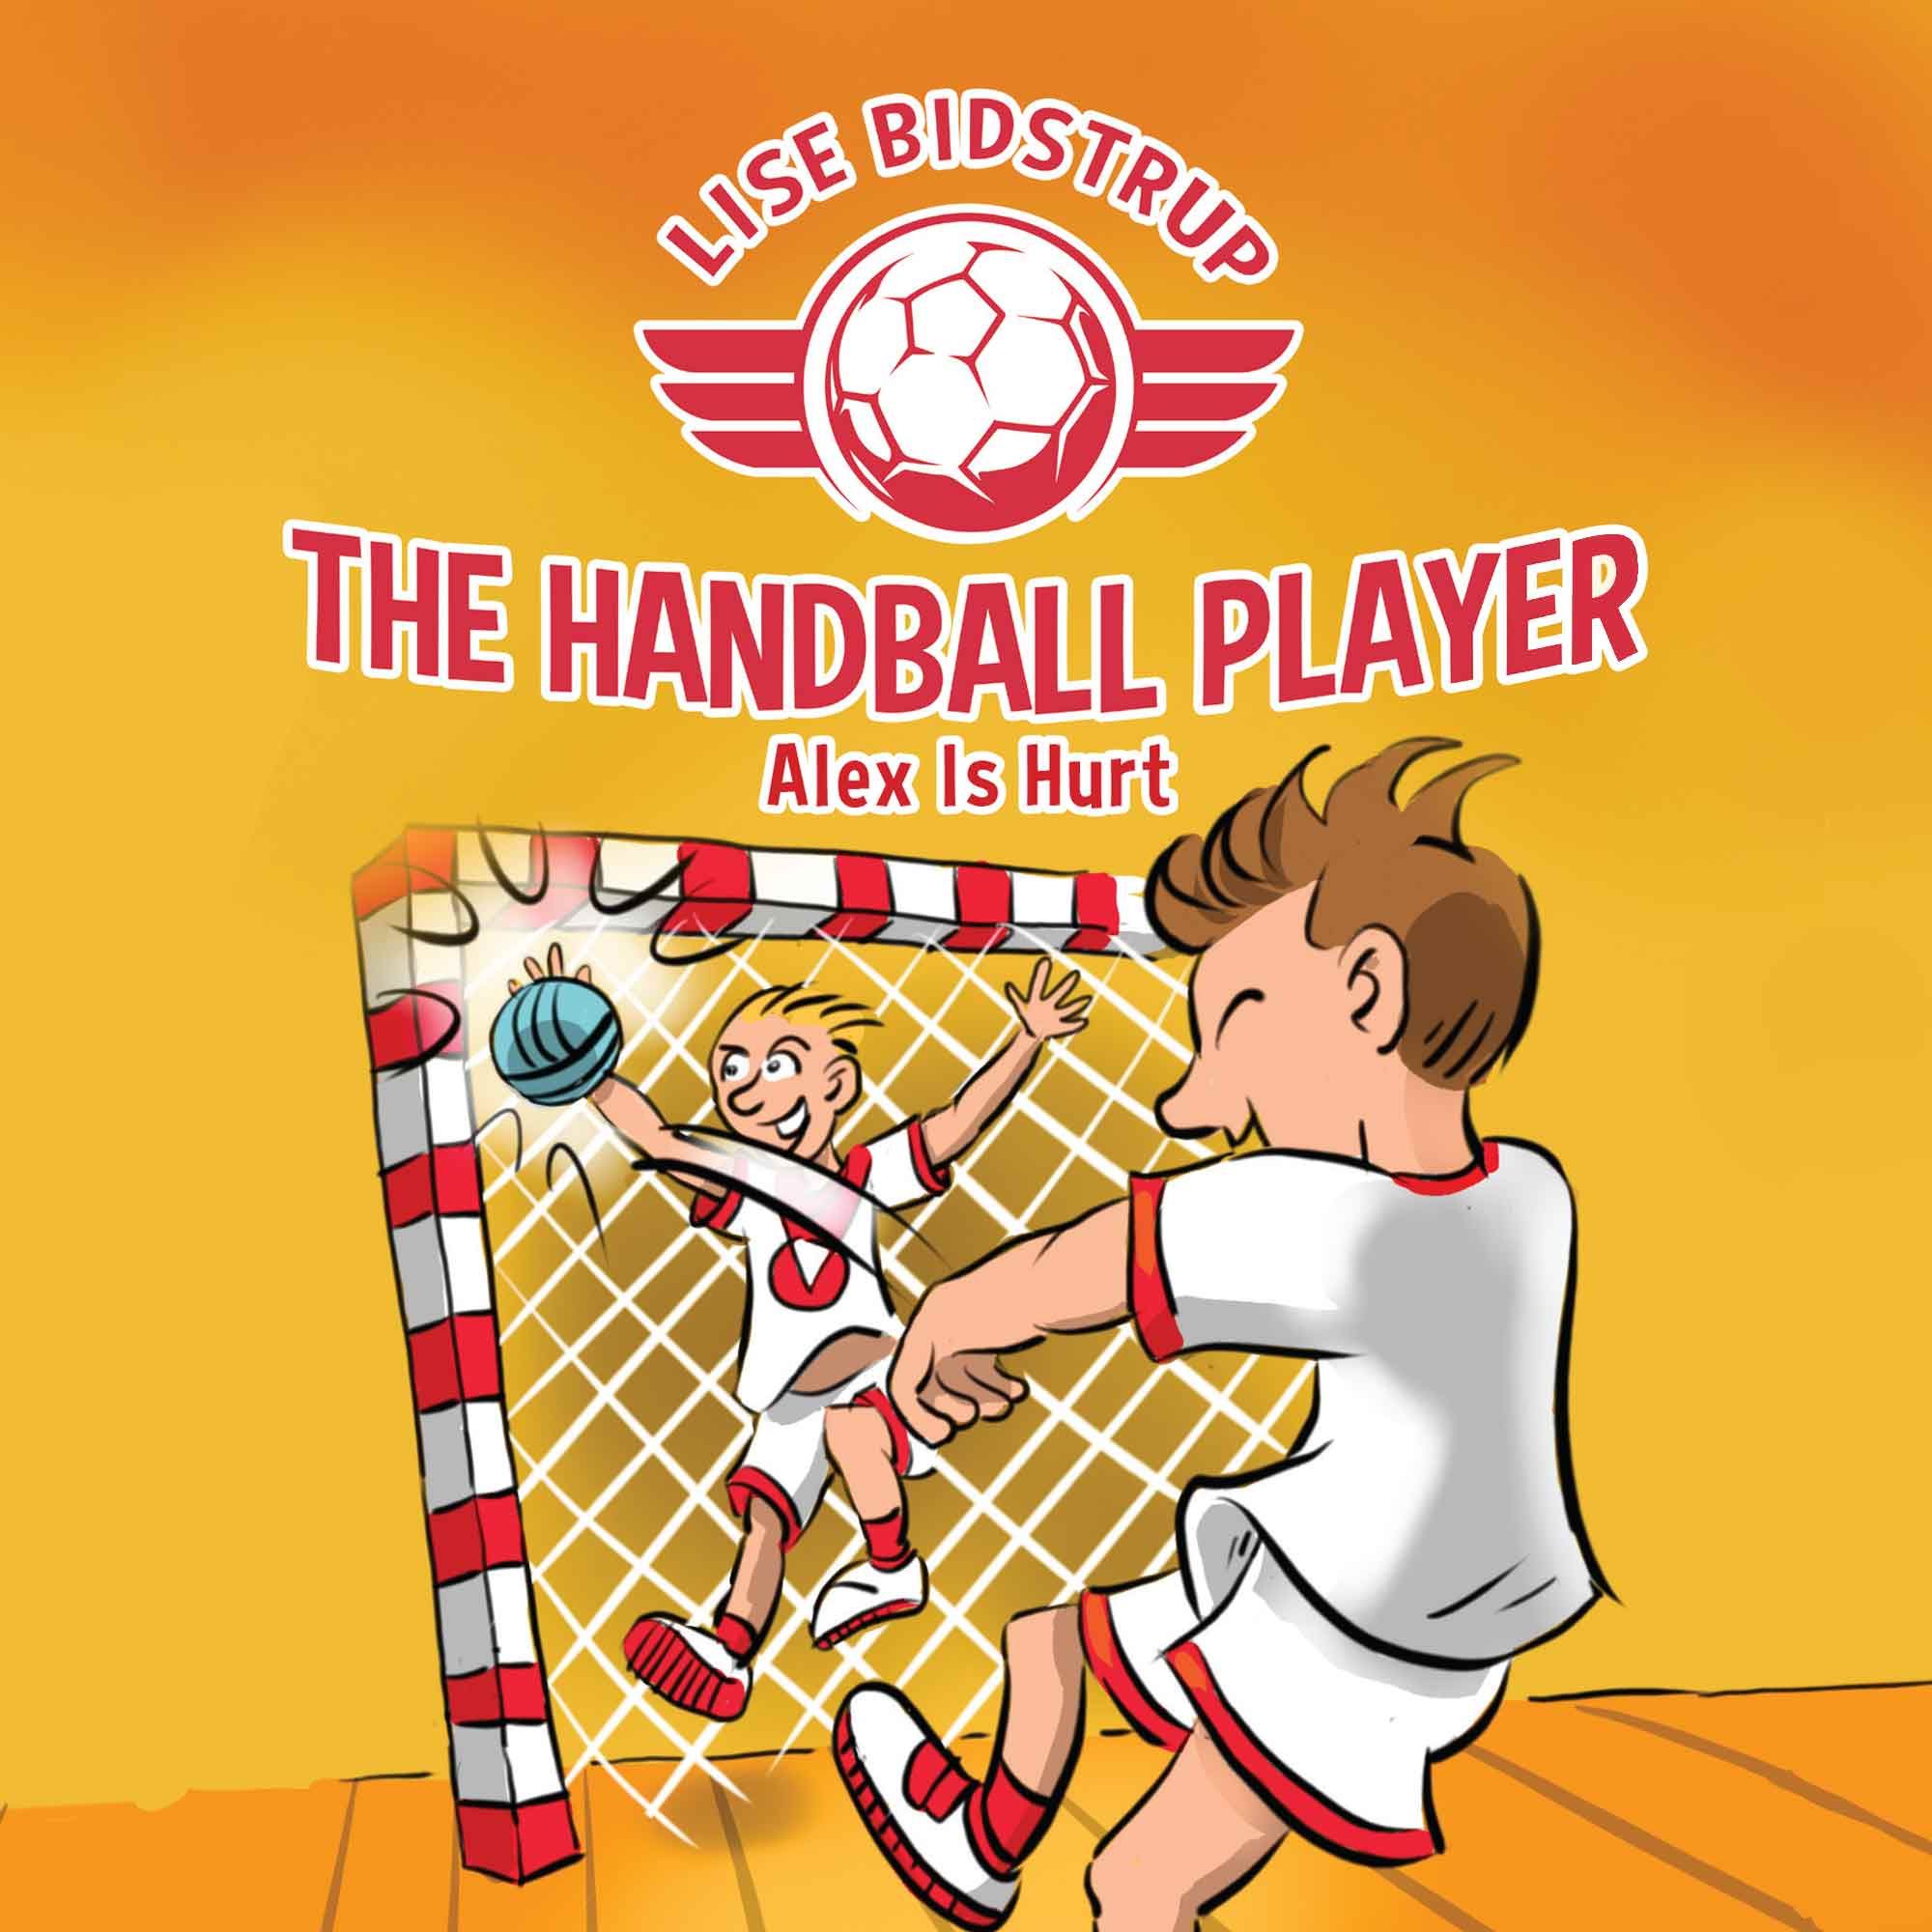 The Handball Player #2: Alex Is Hurt, ljudbok av Lise Bidstrup